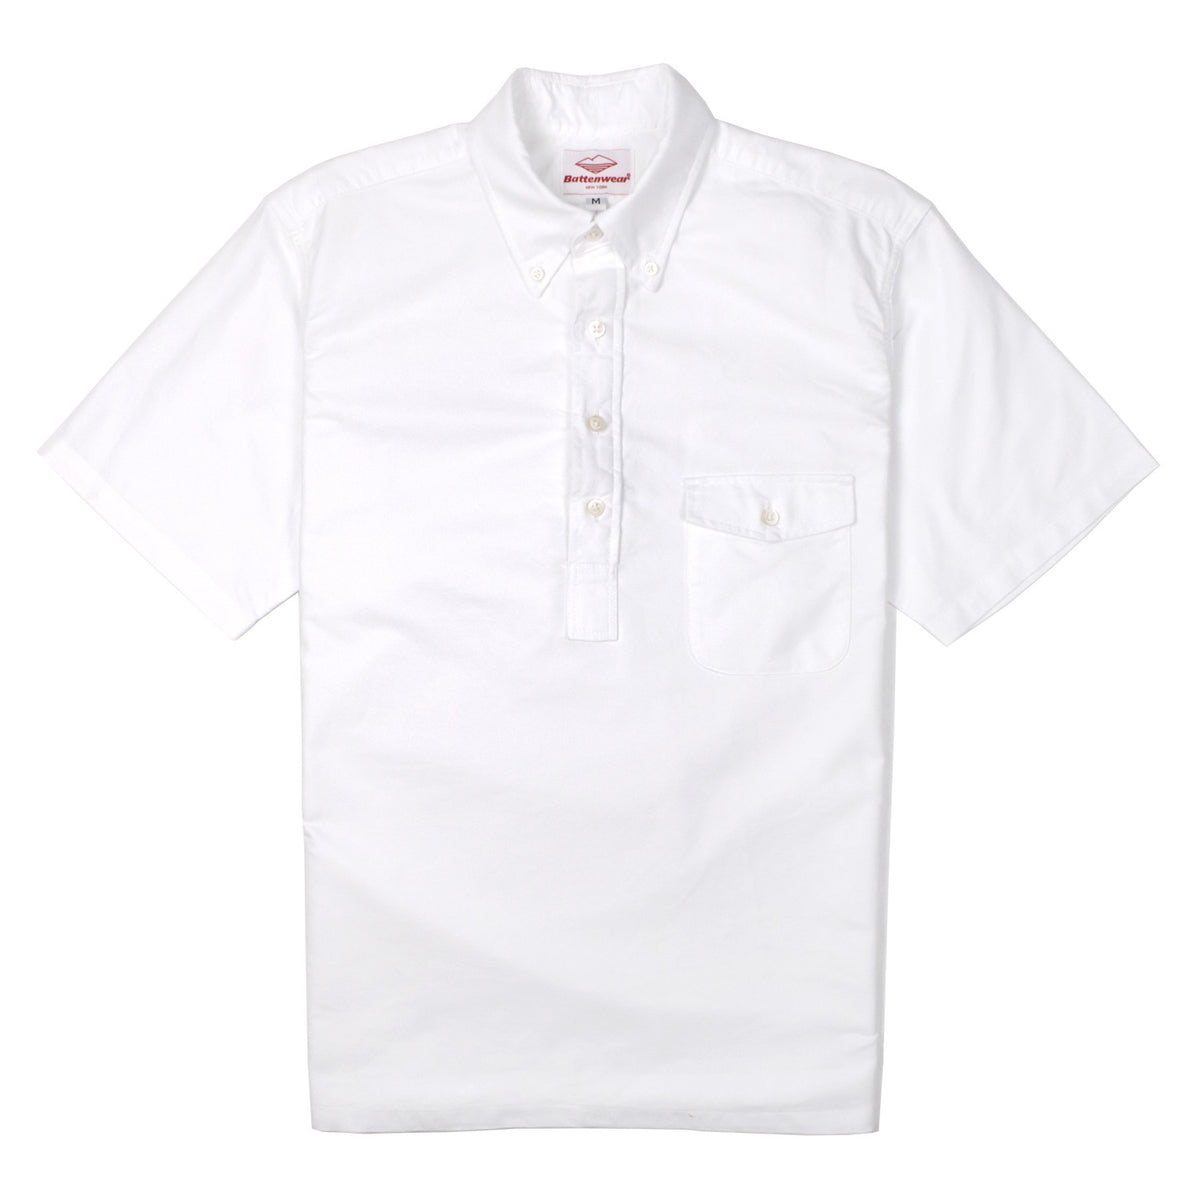 Battenwear - Sport Pullover Shirt - White